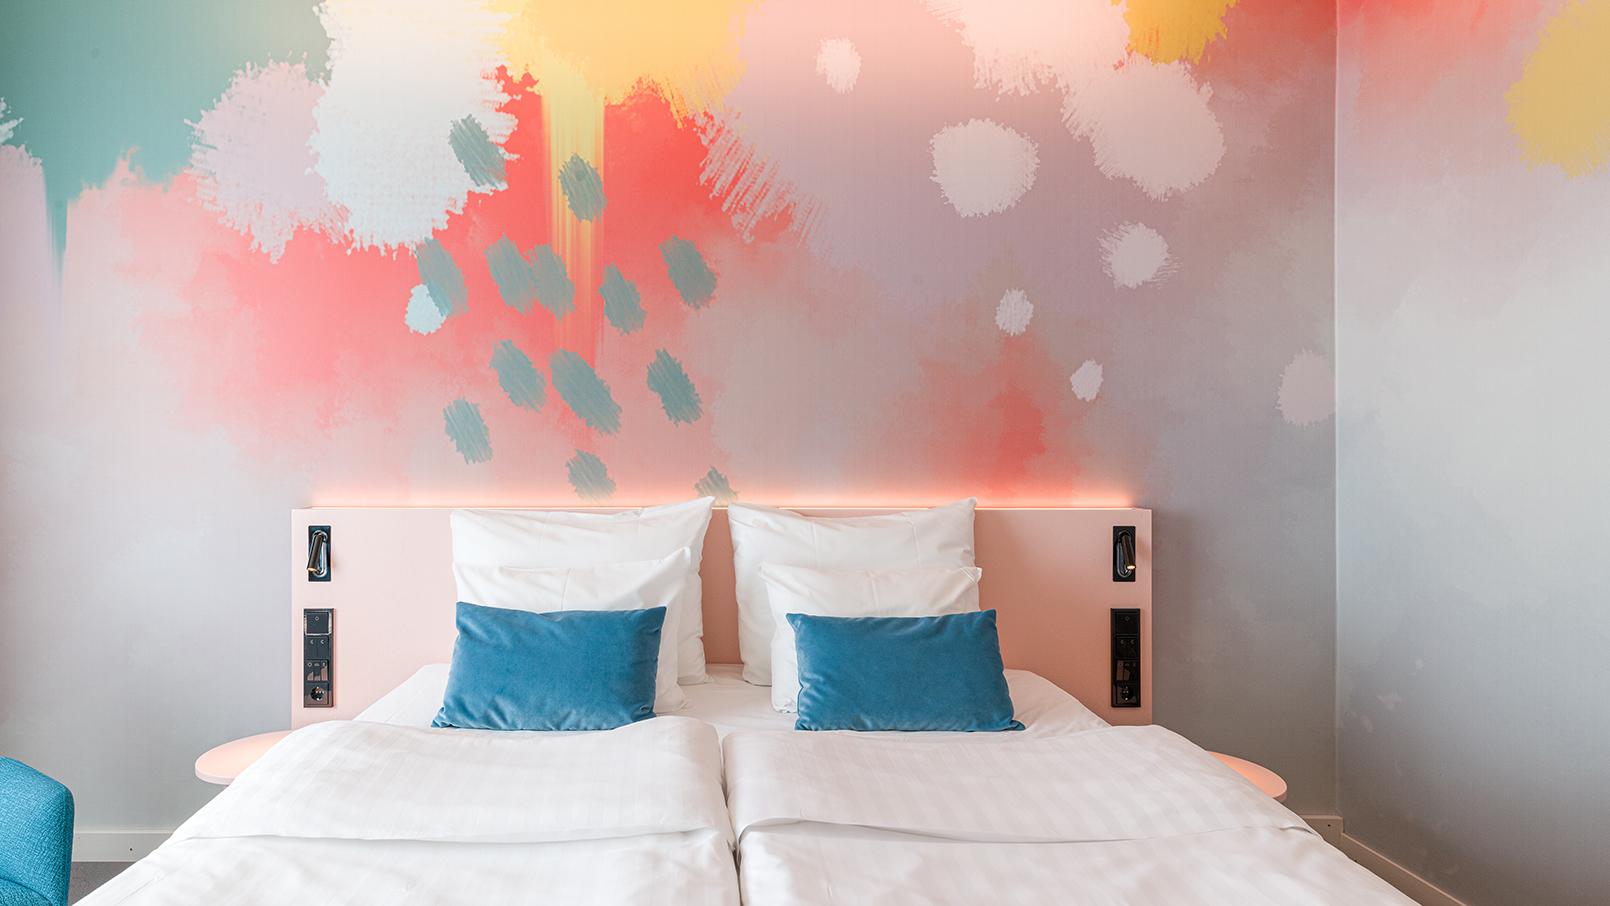 Rune & Berg Designin suunnittelema hotellihuone Sokos Hotel Flamingolle